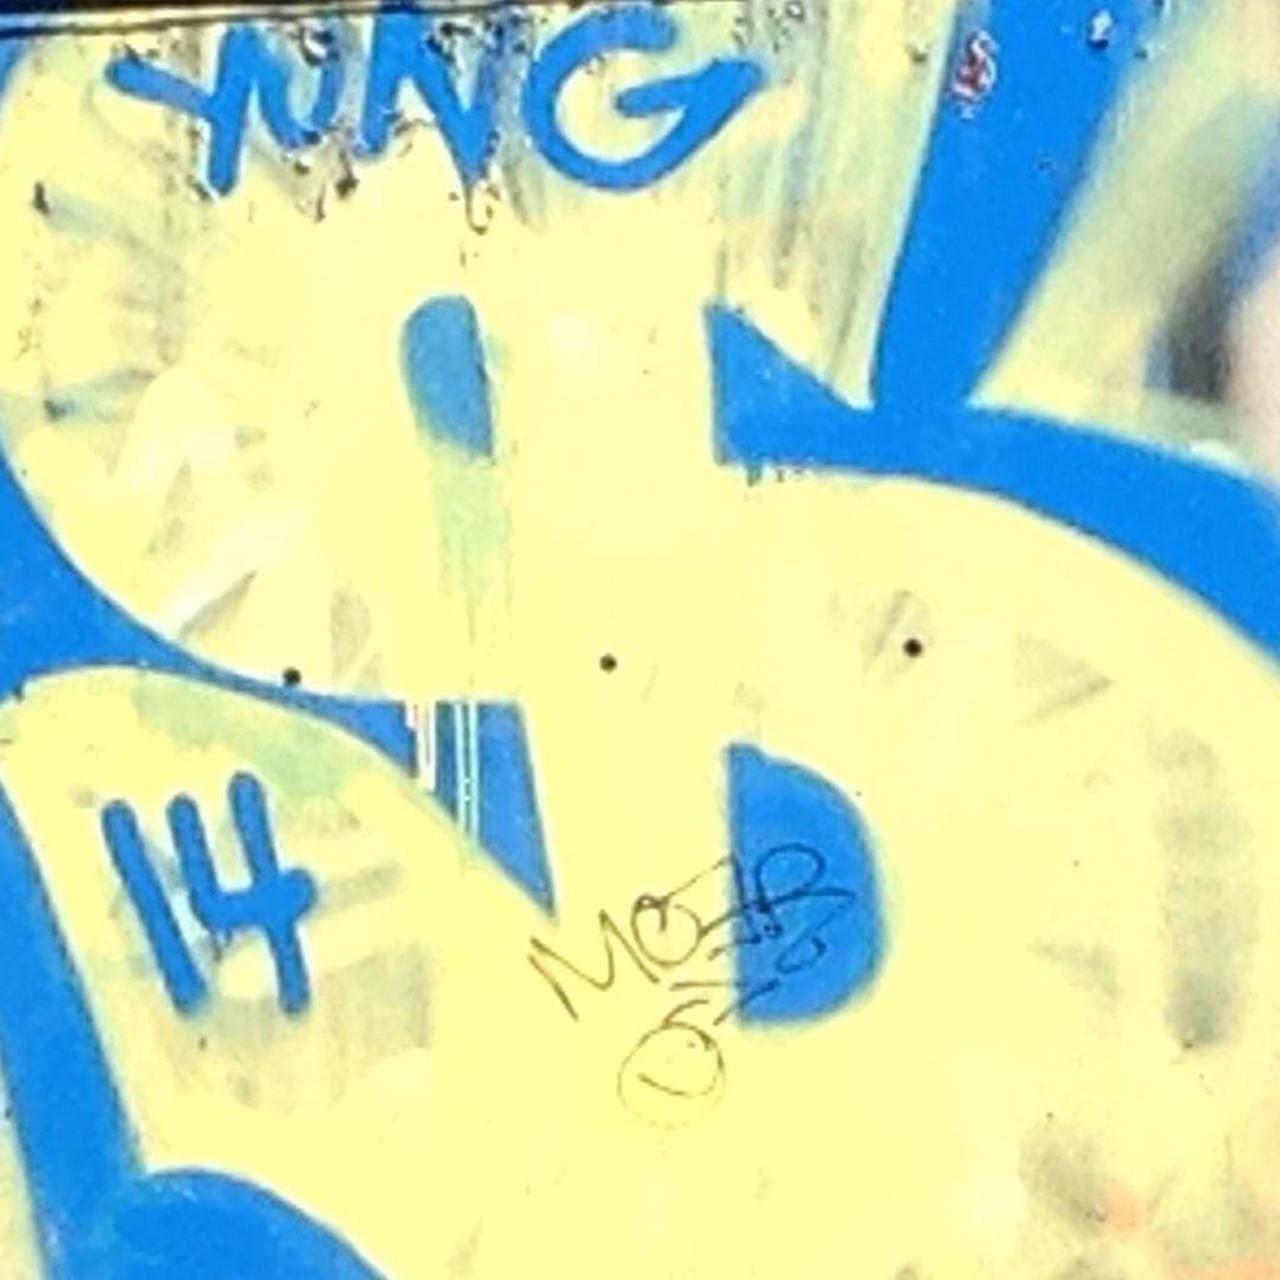 #spraycan #spraypaint #tagging #streetart #graffiti #GraffitiArt #graffitiporn http://ift.tt/1Vjglto http://t.co/ht3oXEwUzJ